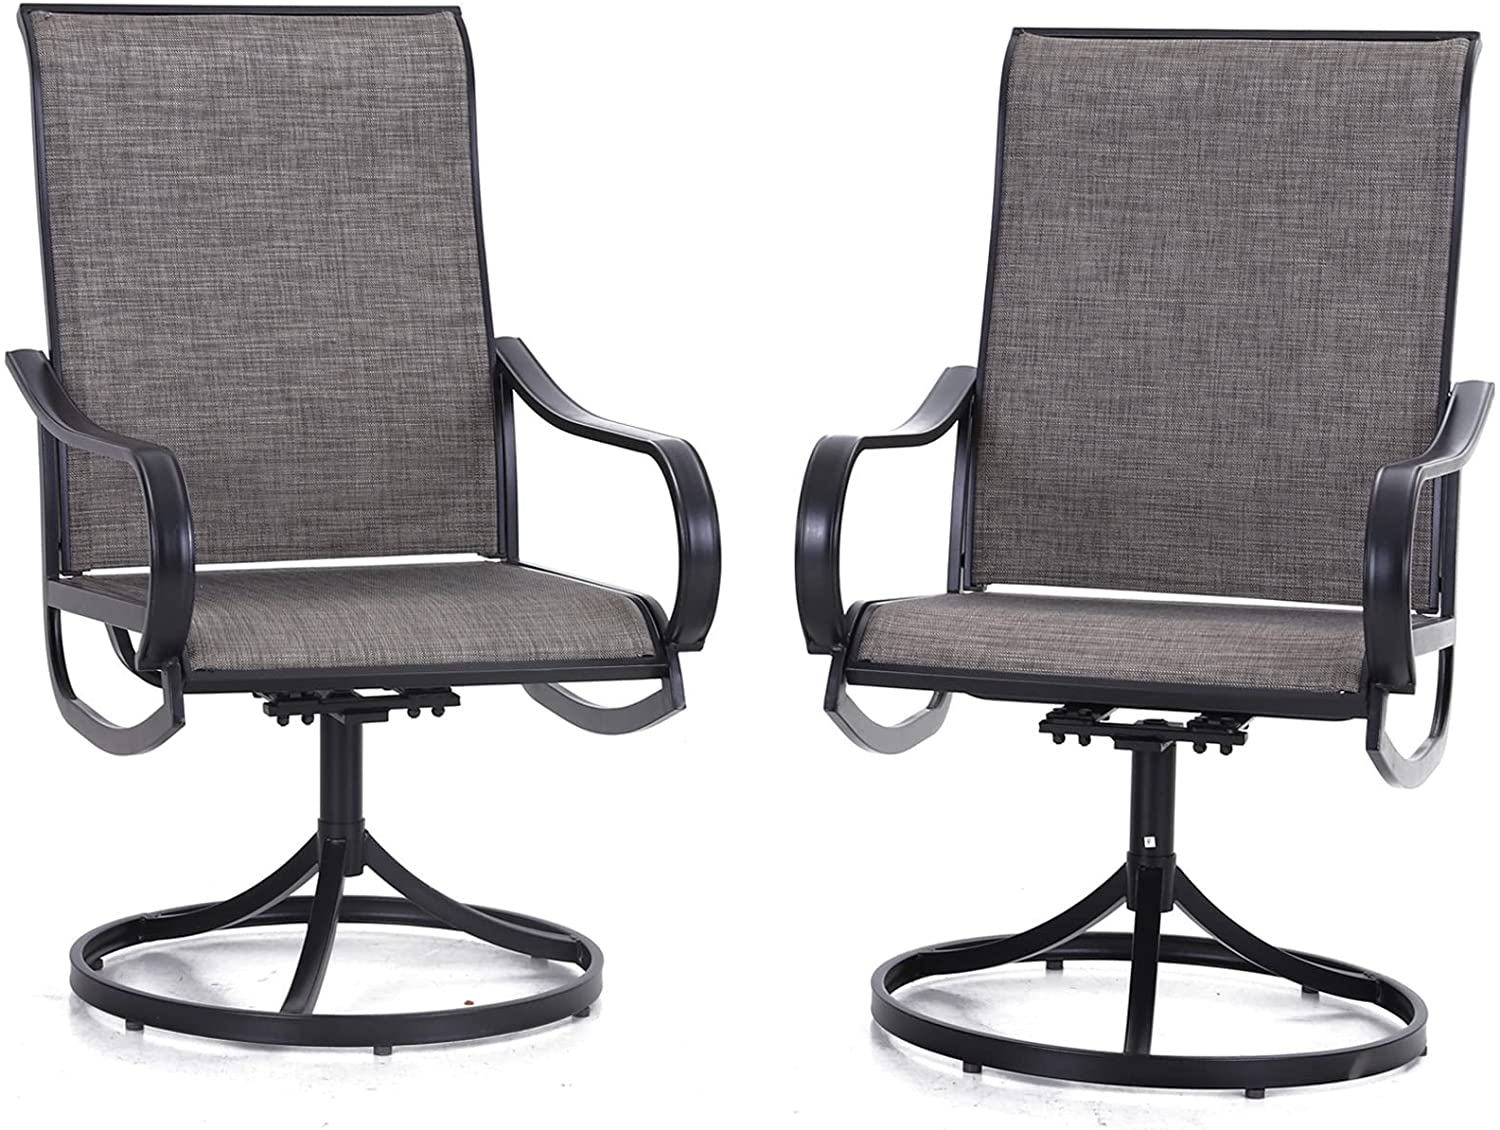 PHI VILLA Ergonomic Weather Resistant Swivel Patio Chairs, 2-Piece